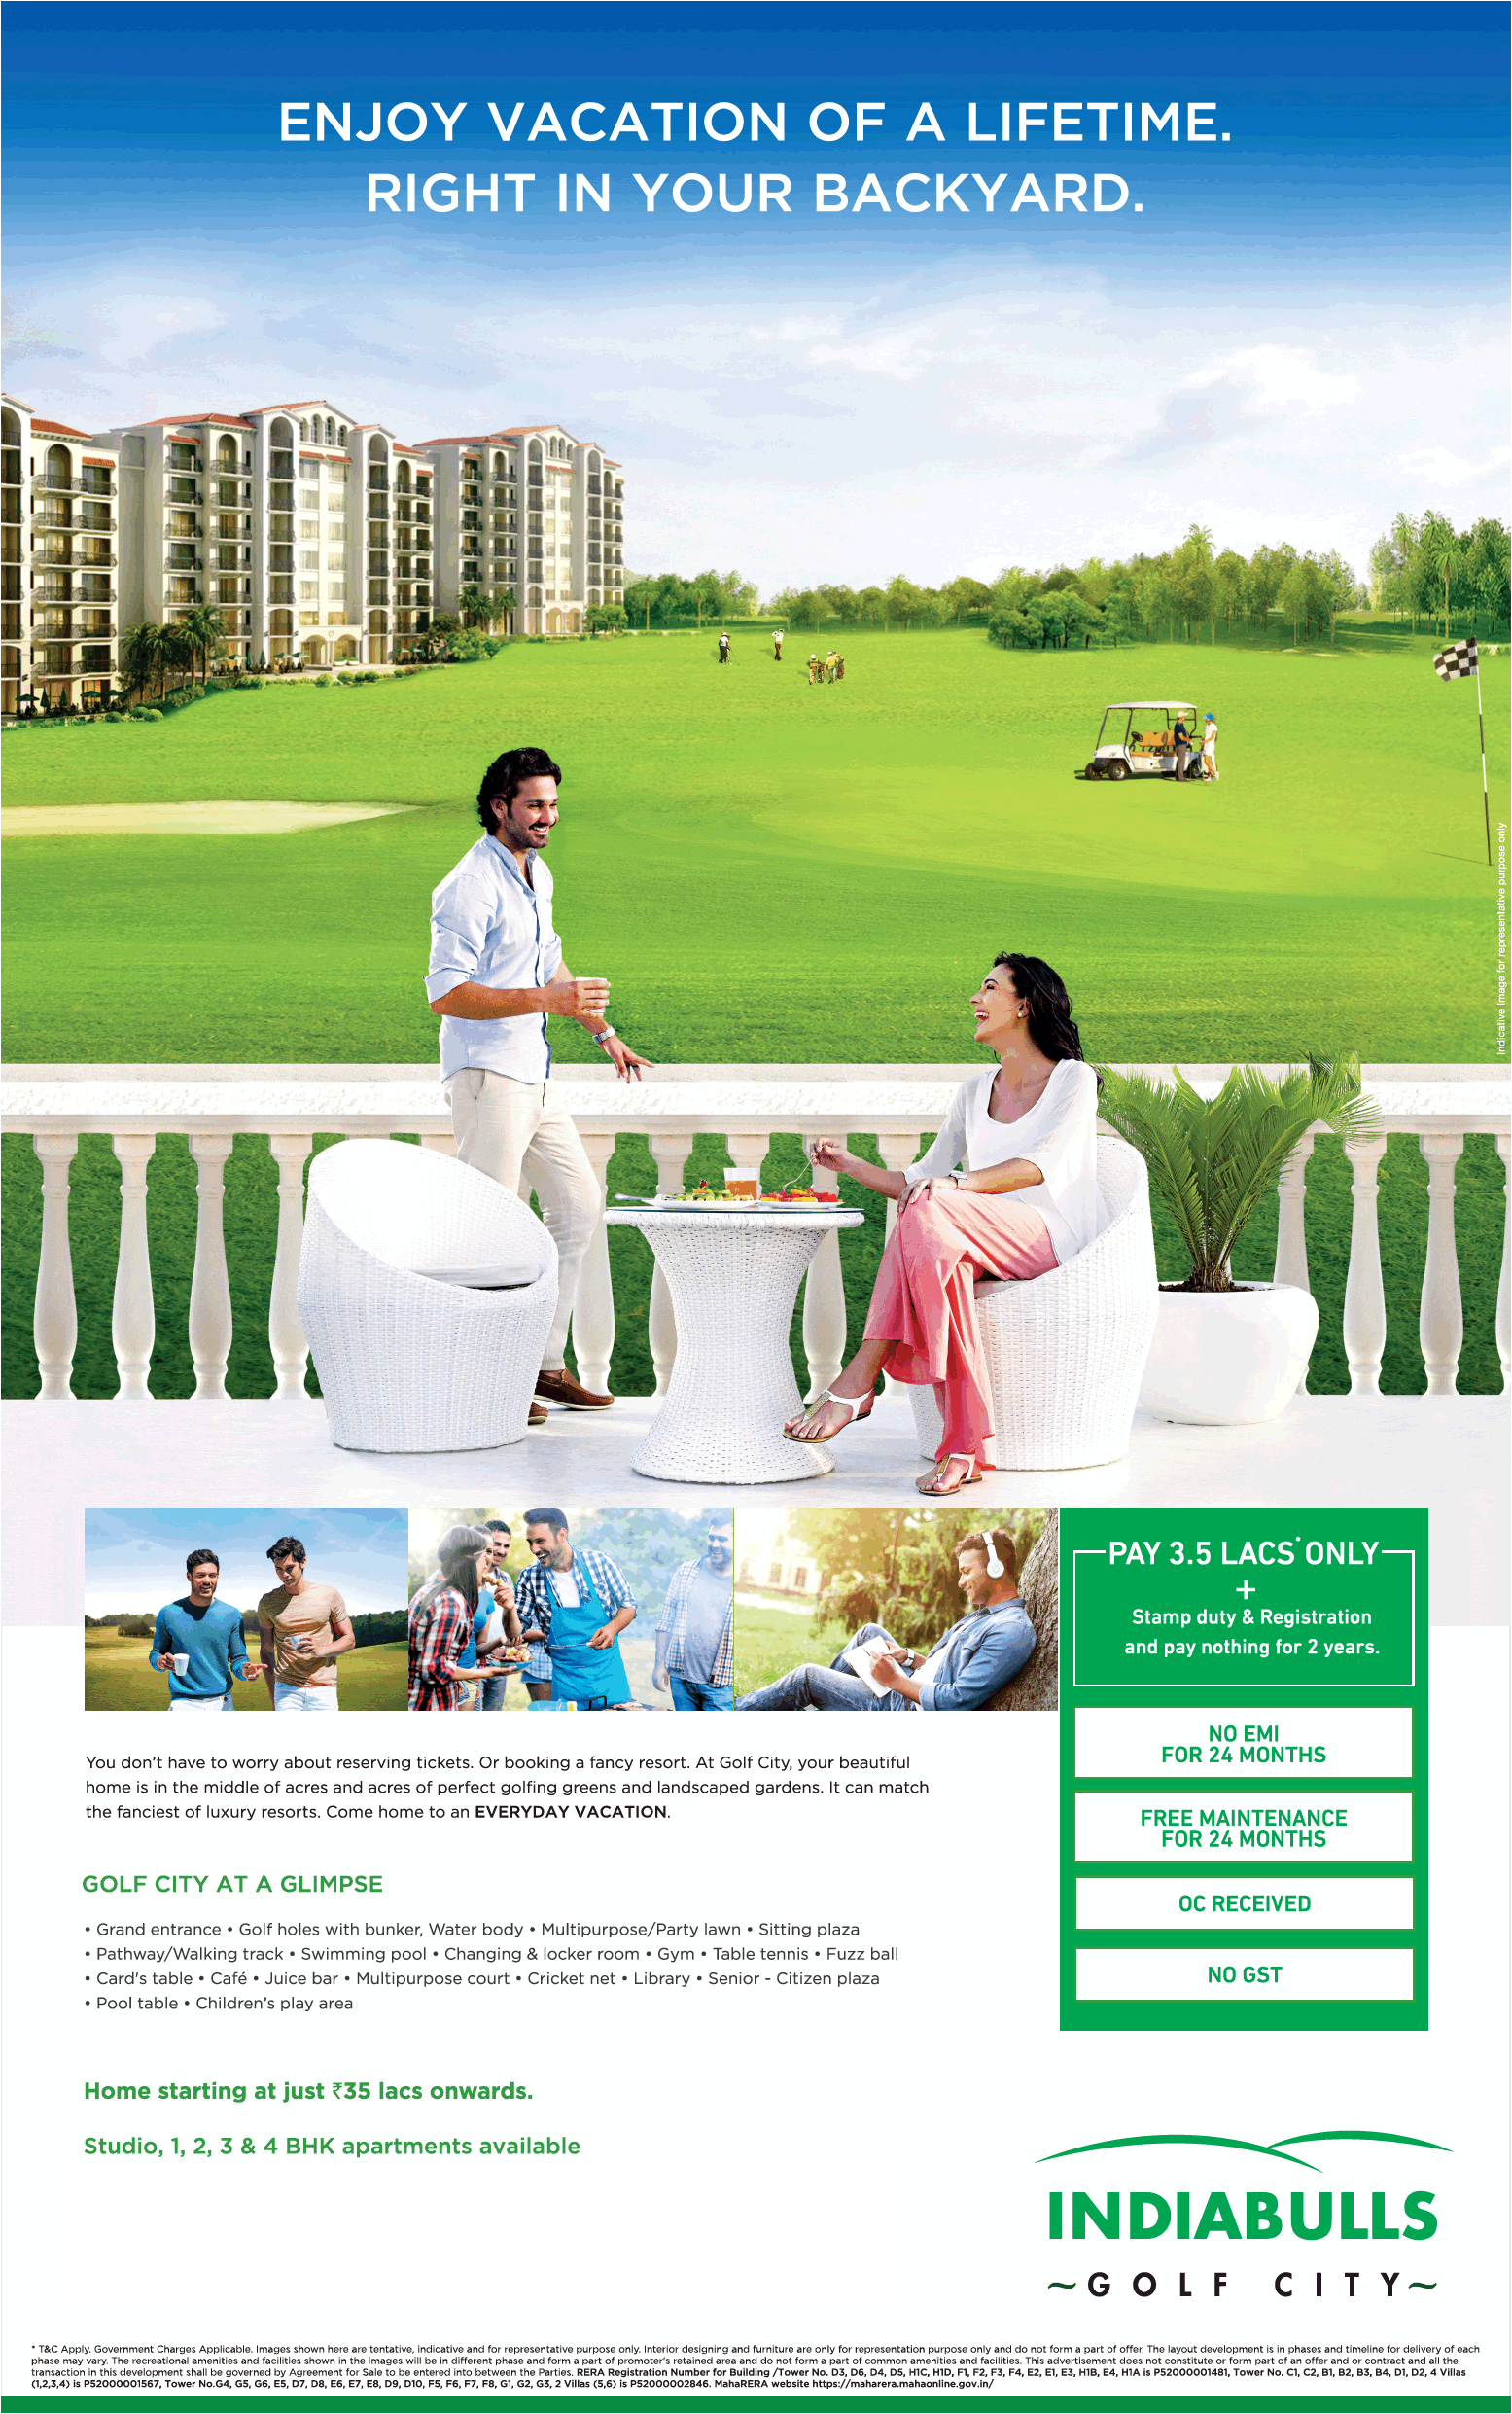 Pay Rs. 3.5 lakhs only at Indiabulls Golf City in Navi Mumbai